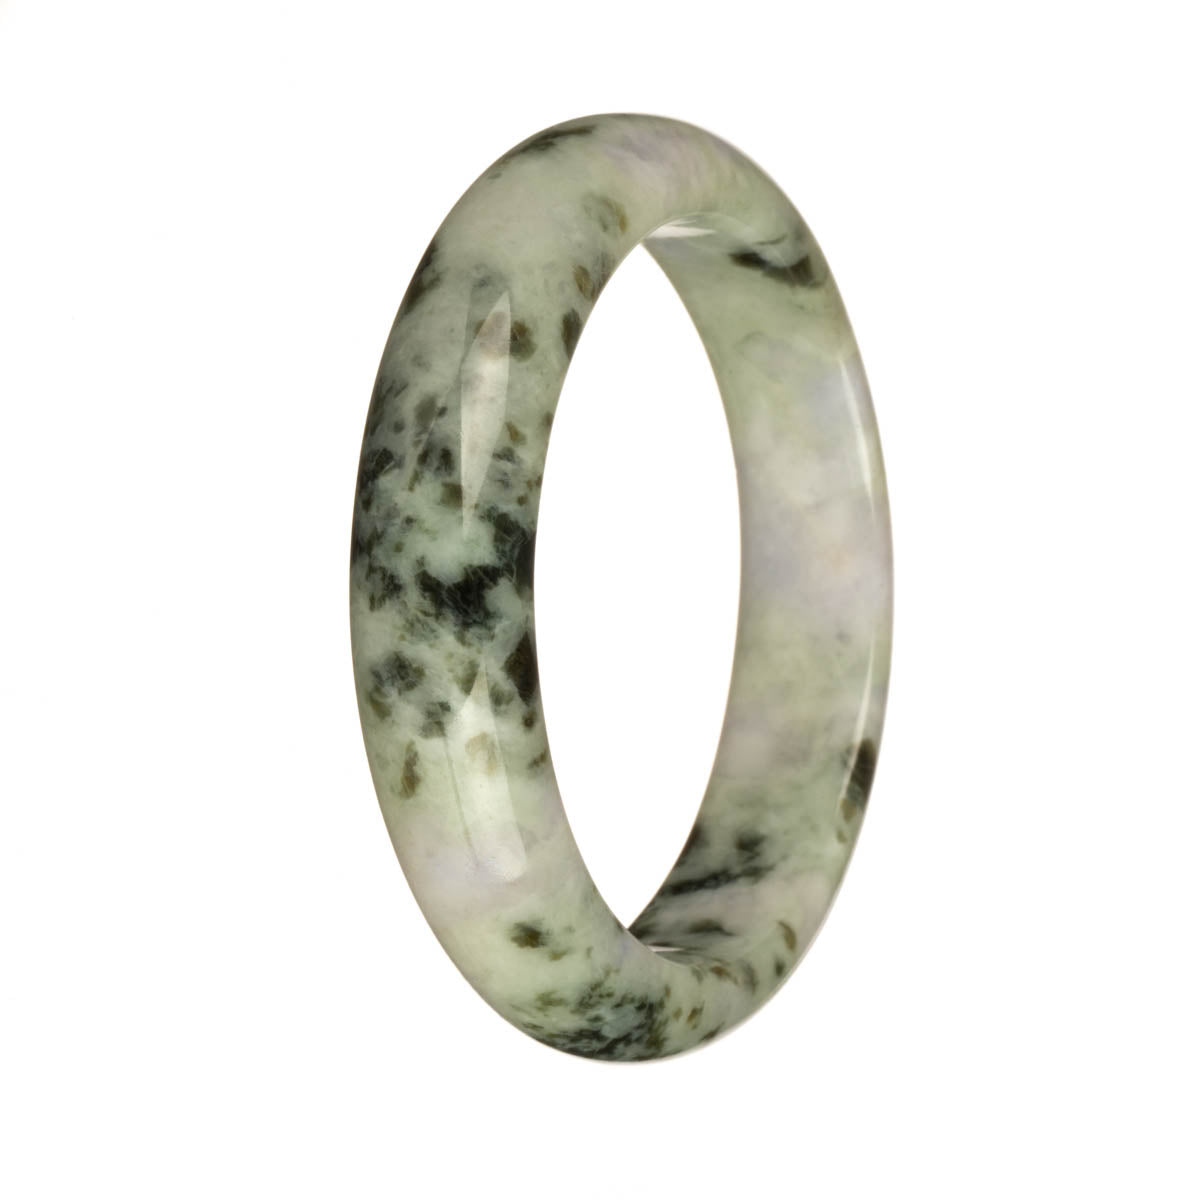 58.1mm White with Lavender and Olive Green Patterns Jade Bangle Bracelet